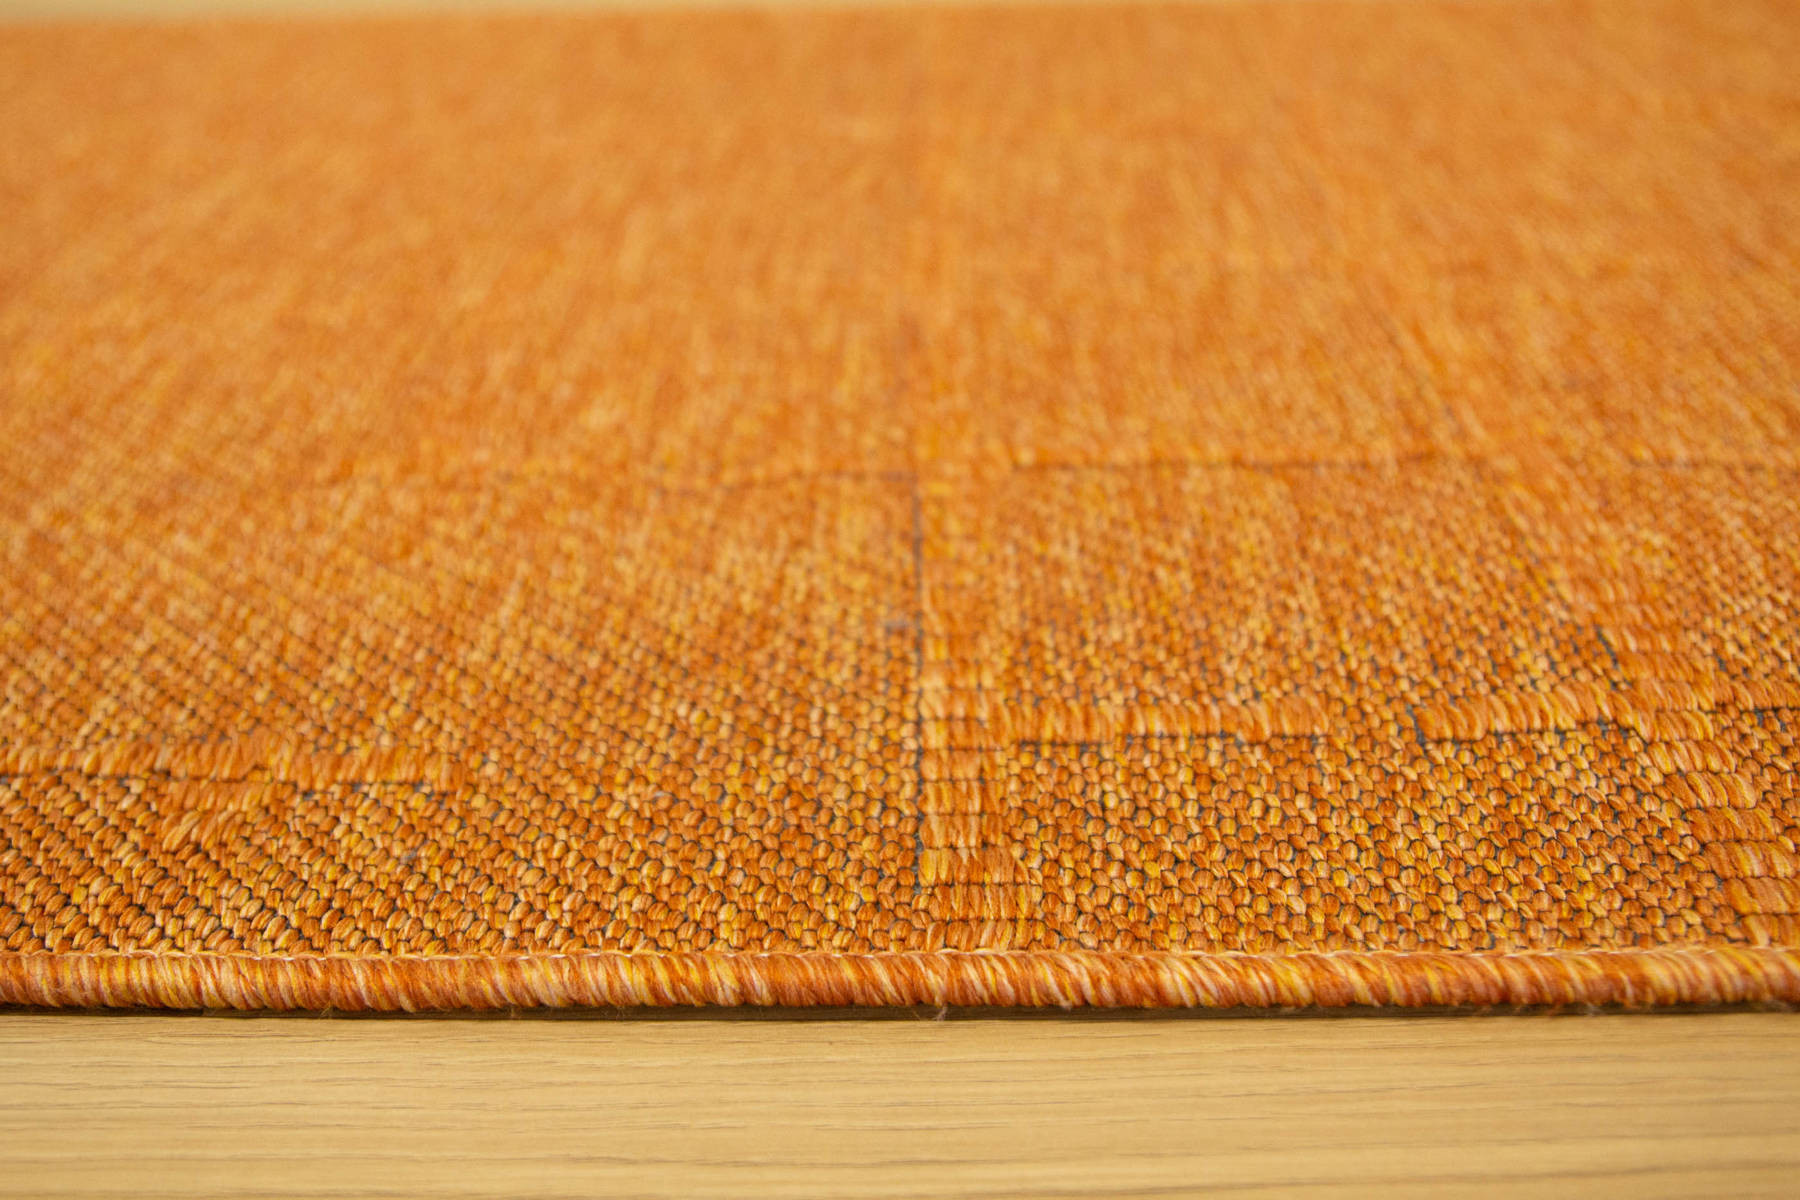 Protišmykový koberček K5047 Tile Deco oranžový